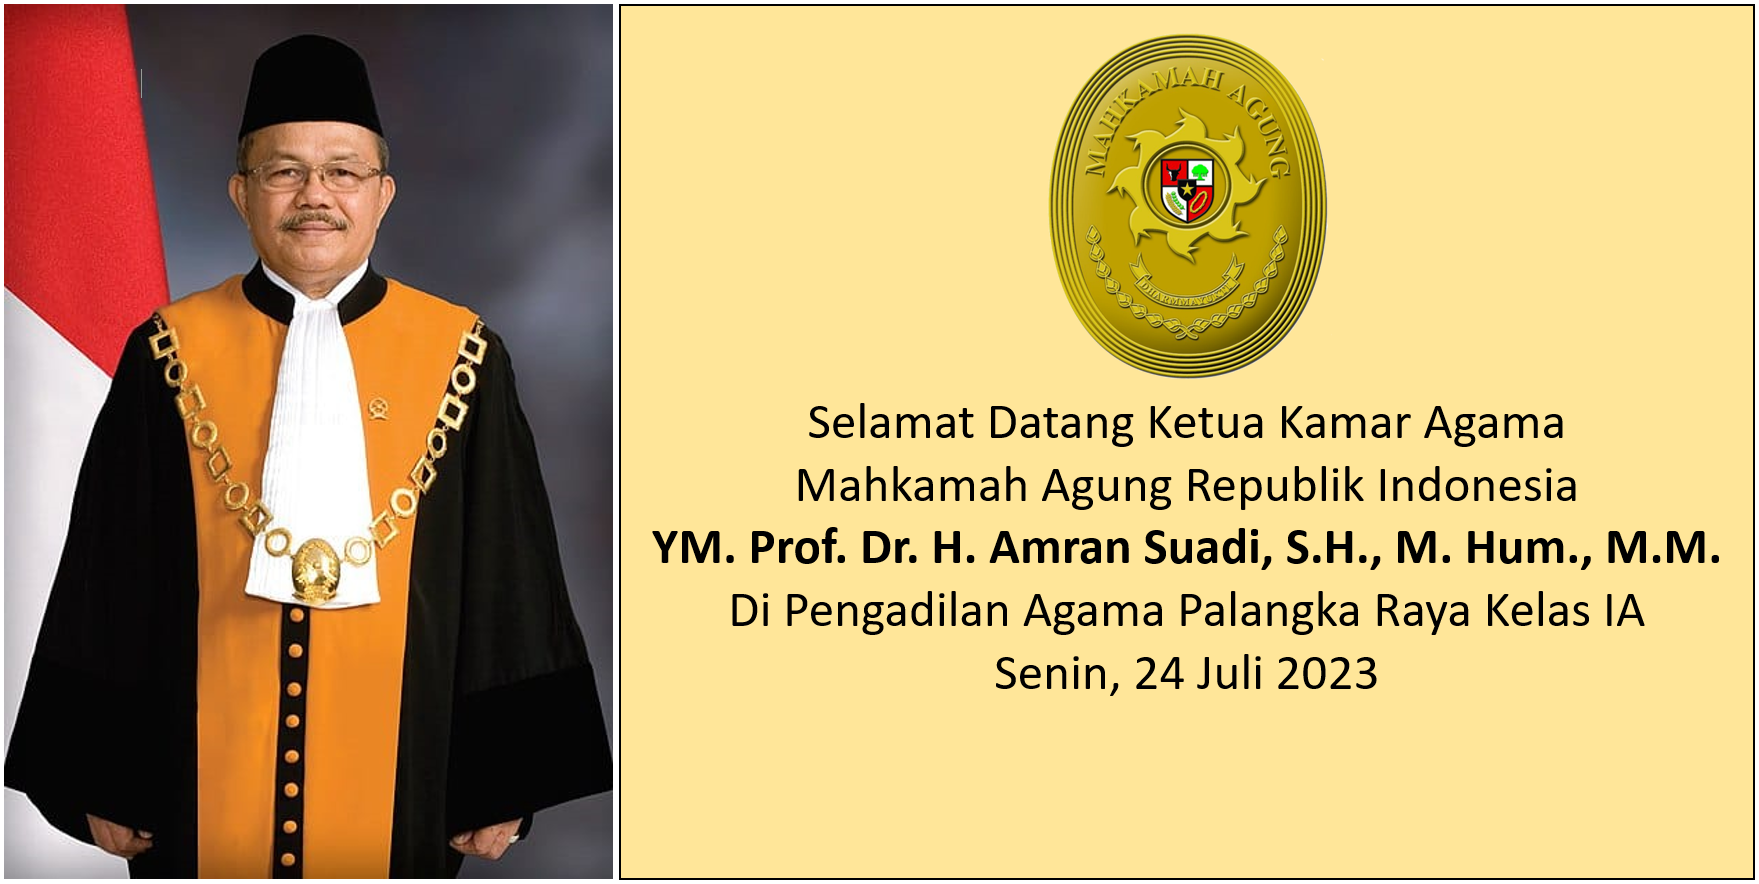 Selamat  Datang Ketua Kamar Agung Mahkamah Agung Republik Indonesia